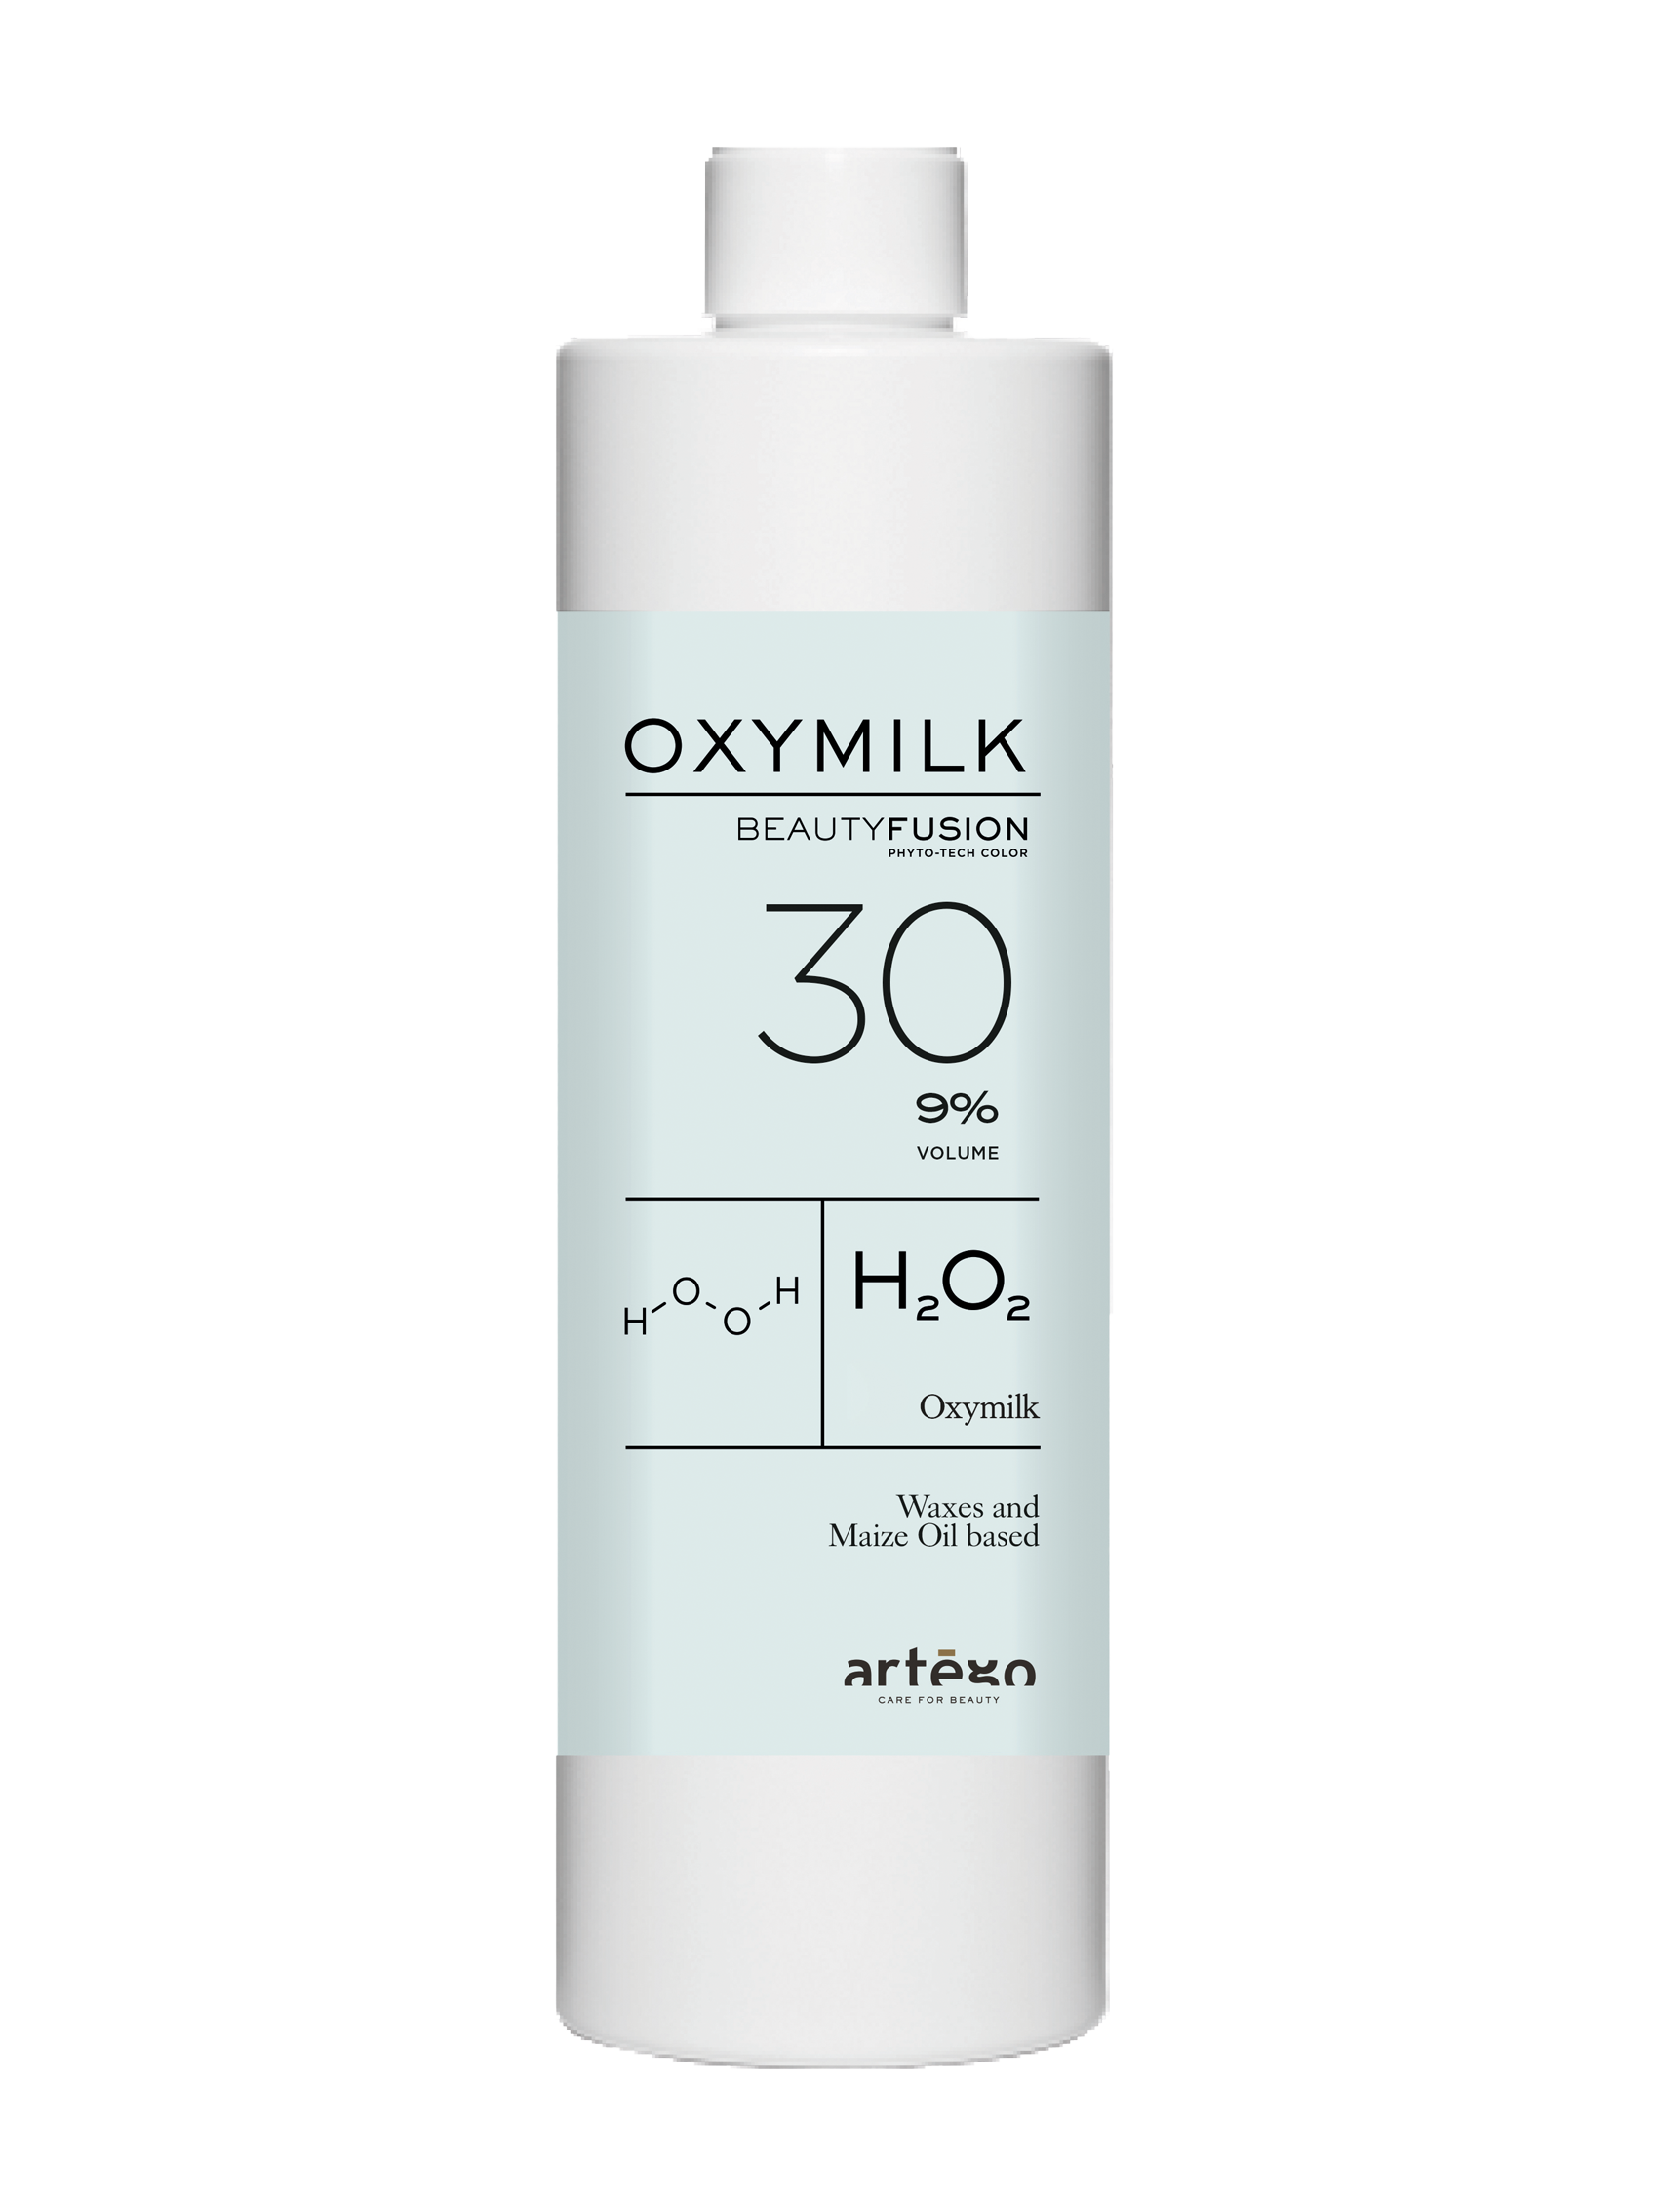 Oxymilk-30-vol-9-Beauty-Fusion